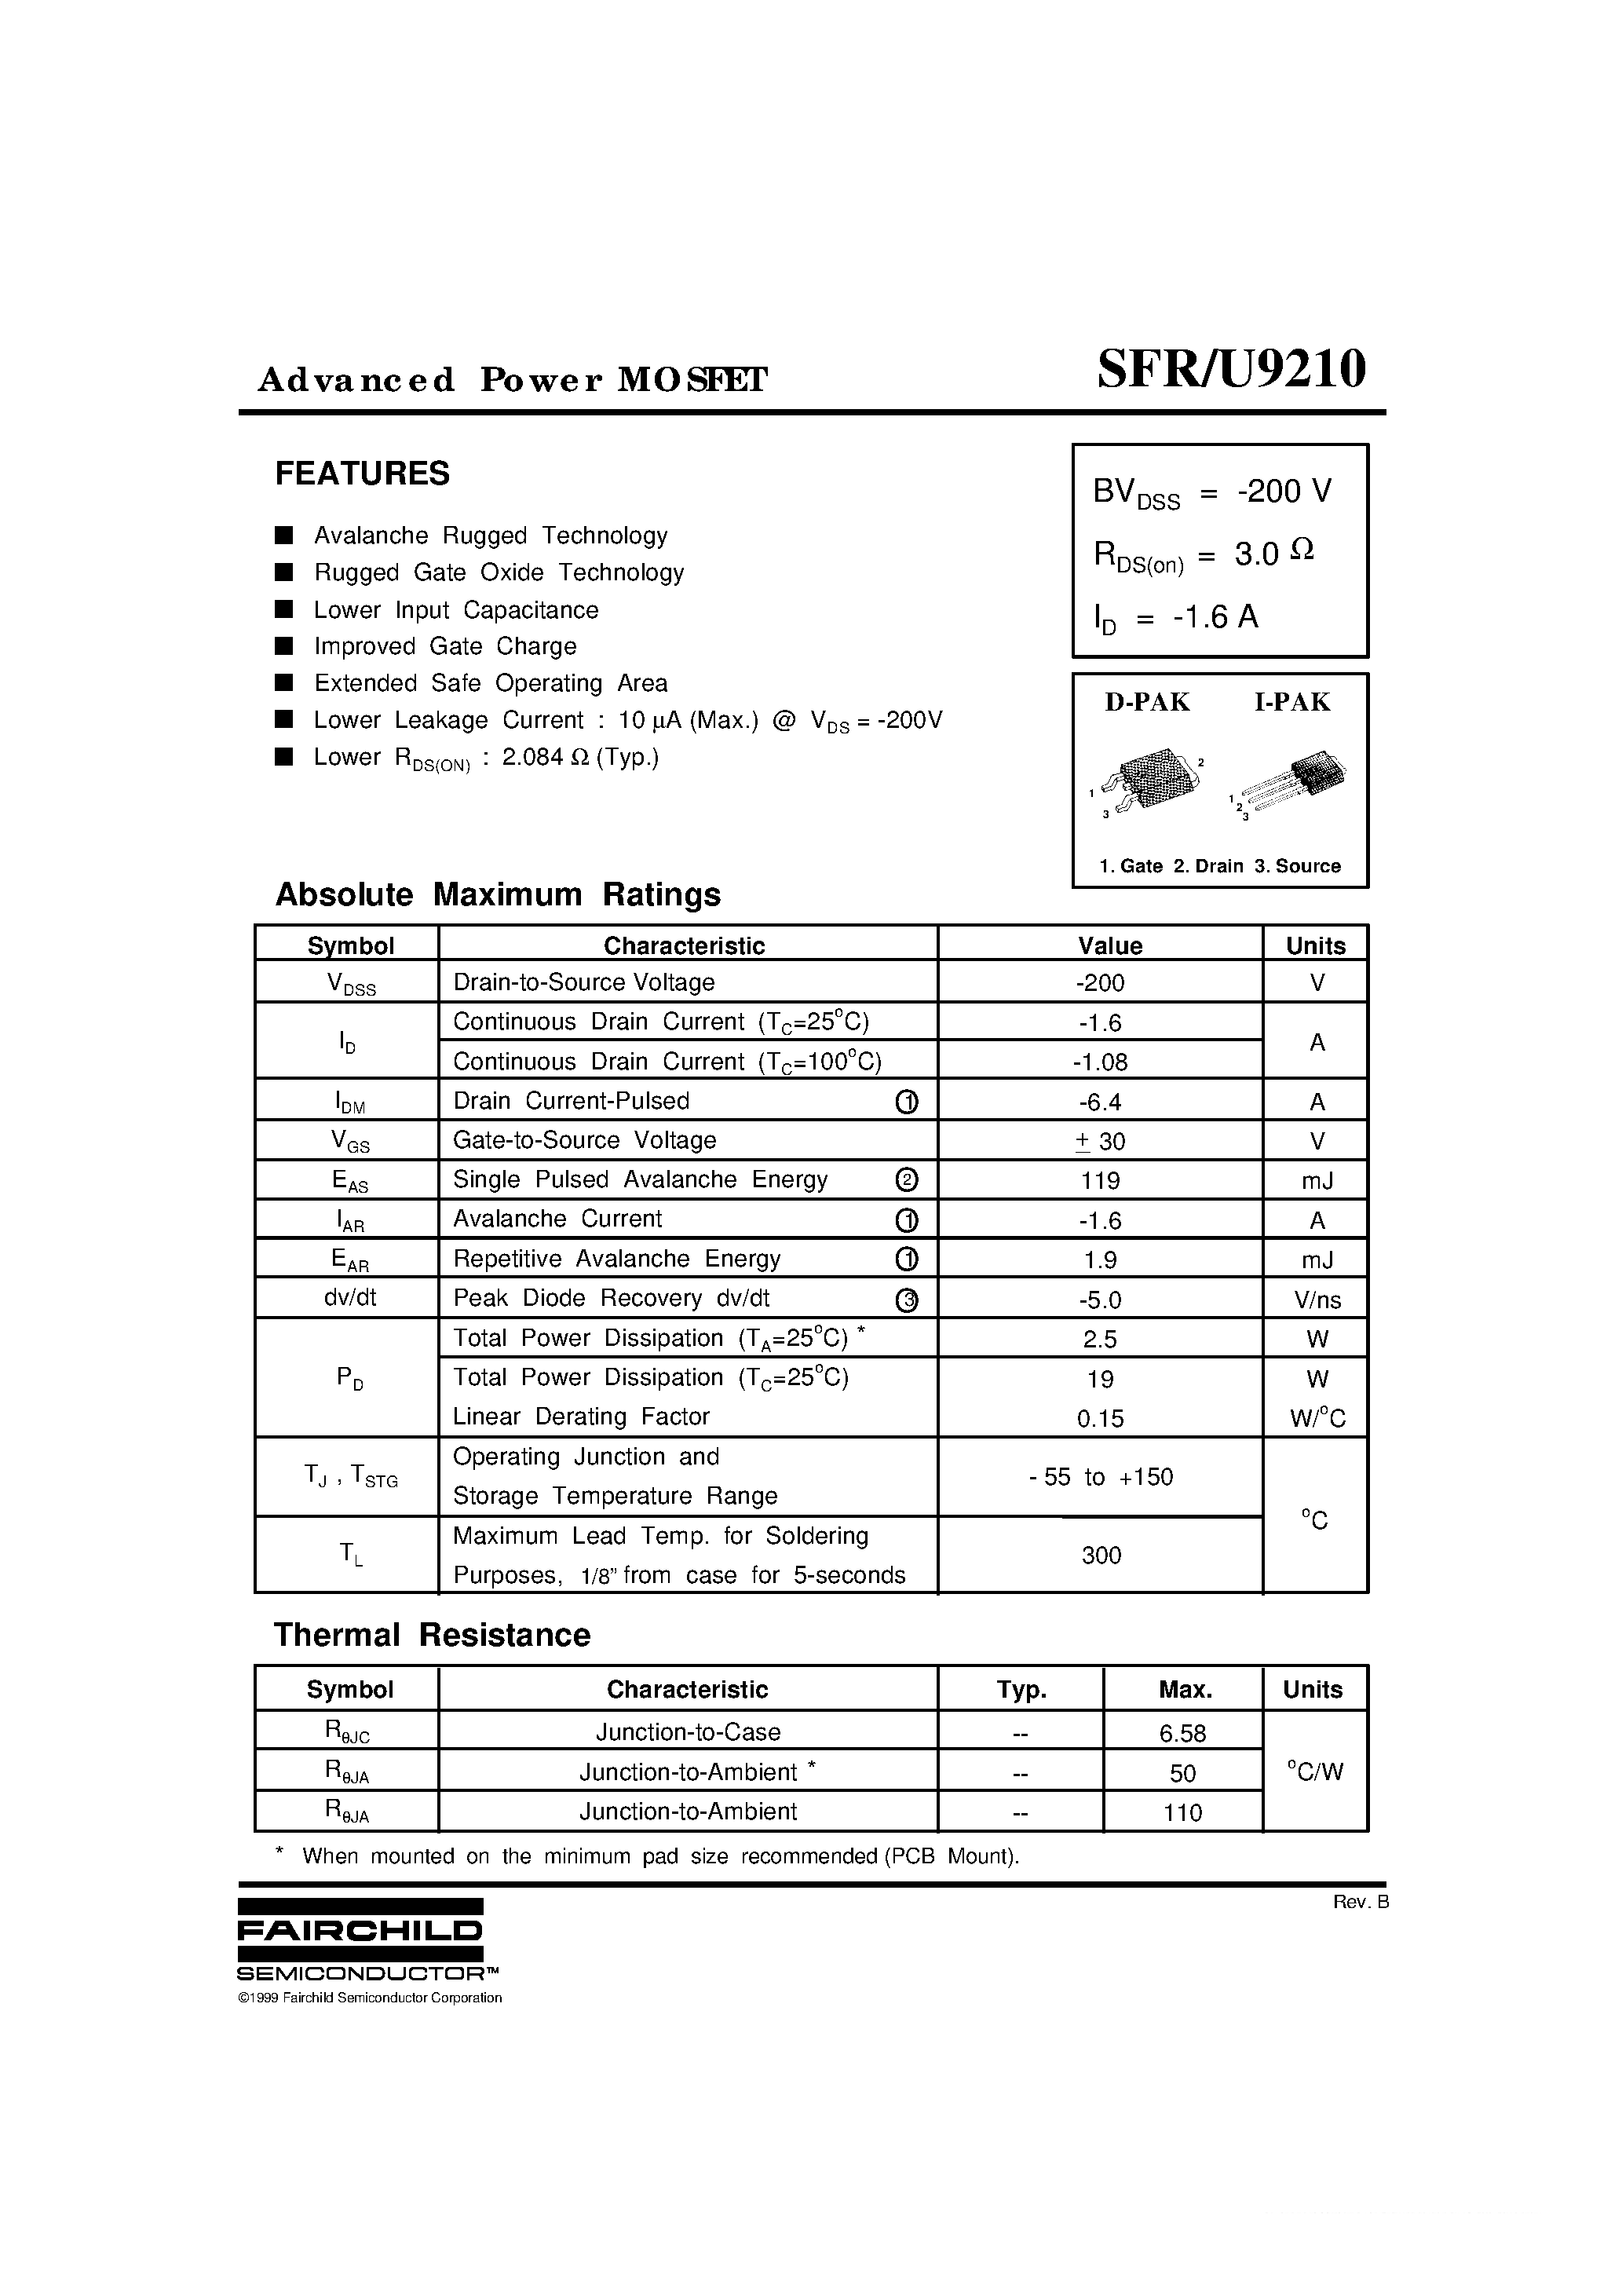 Datasheet SFR9210 - Advanced Power MOSFET page 1